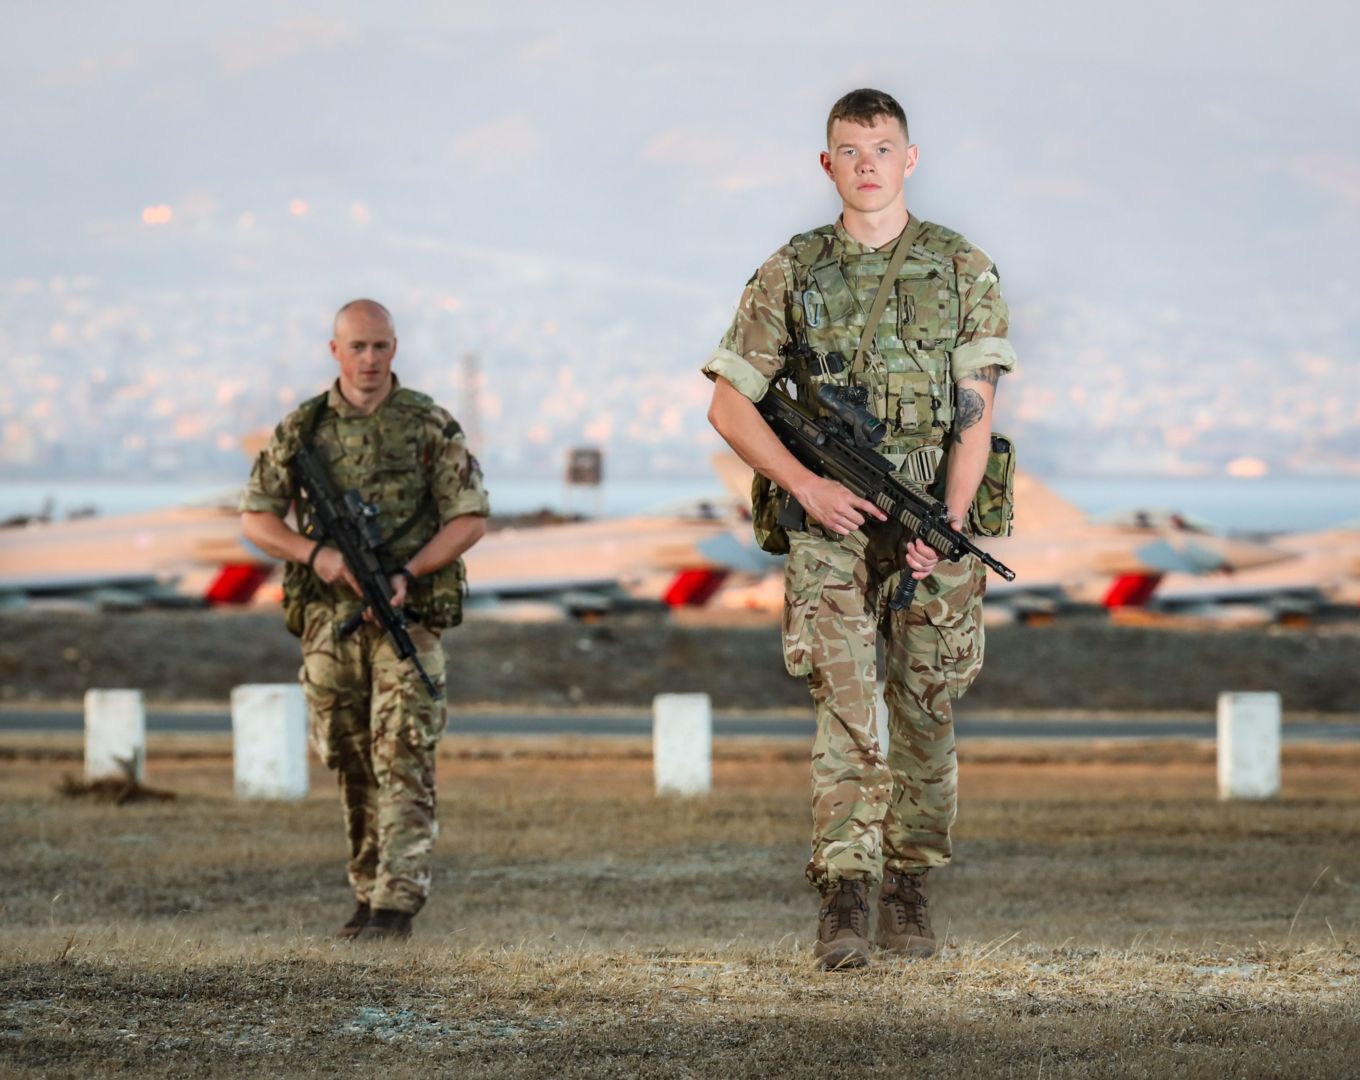 34 Sqn RAF Regiment routine patrol in front of Hercules C-130J aircraft RAF Akrotiri.